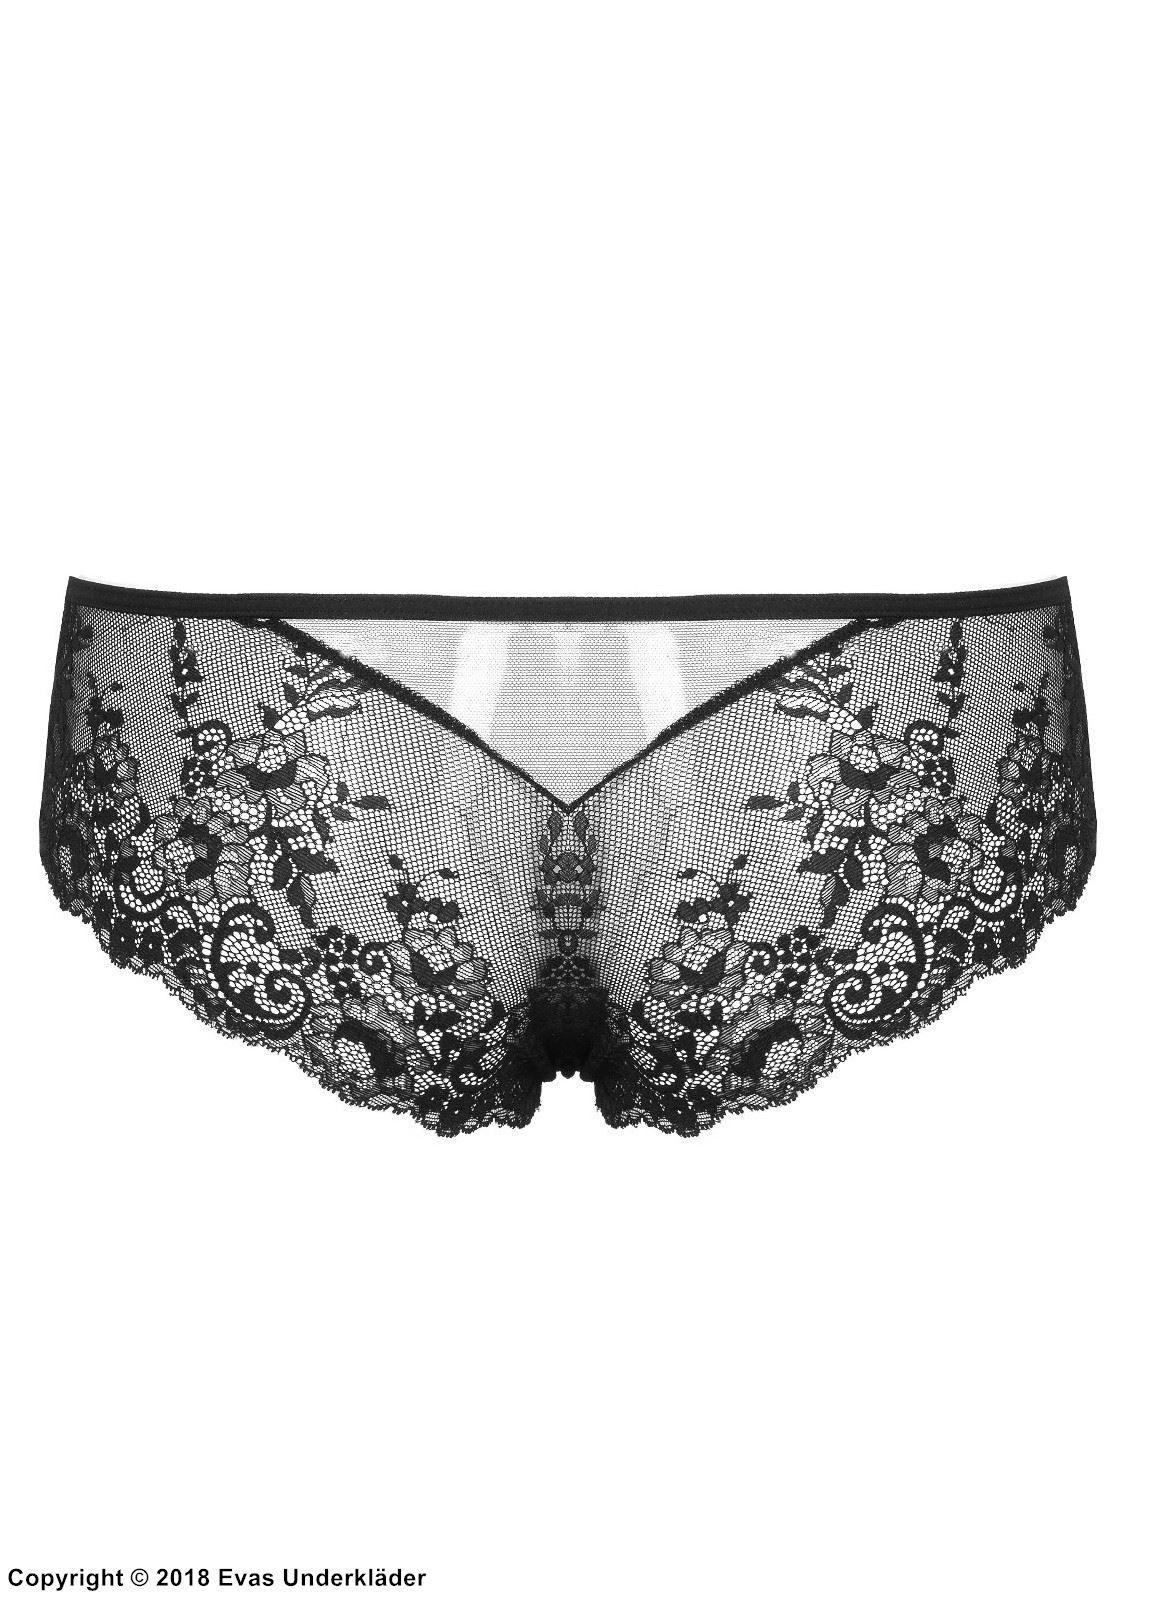 Romantic cheeky panties, sheer mesh, floral lace